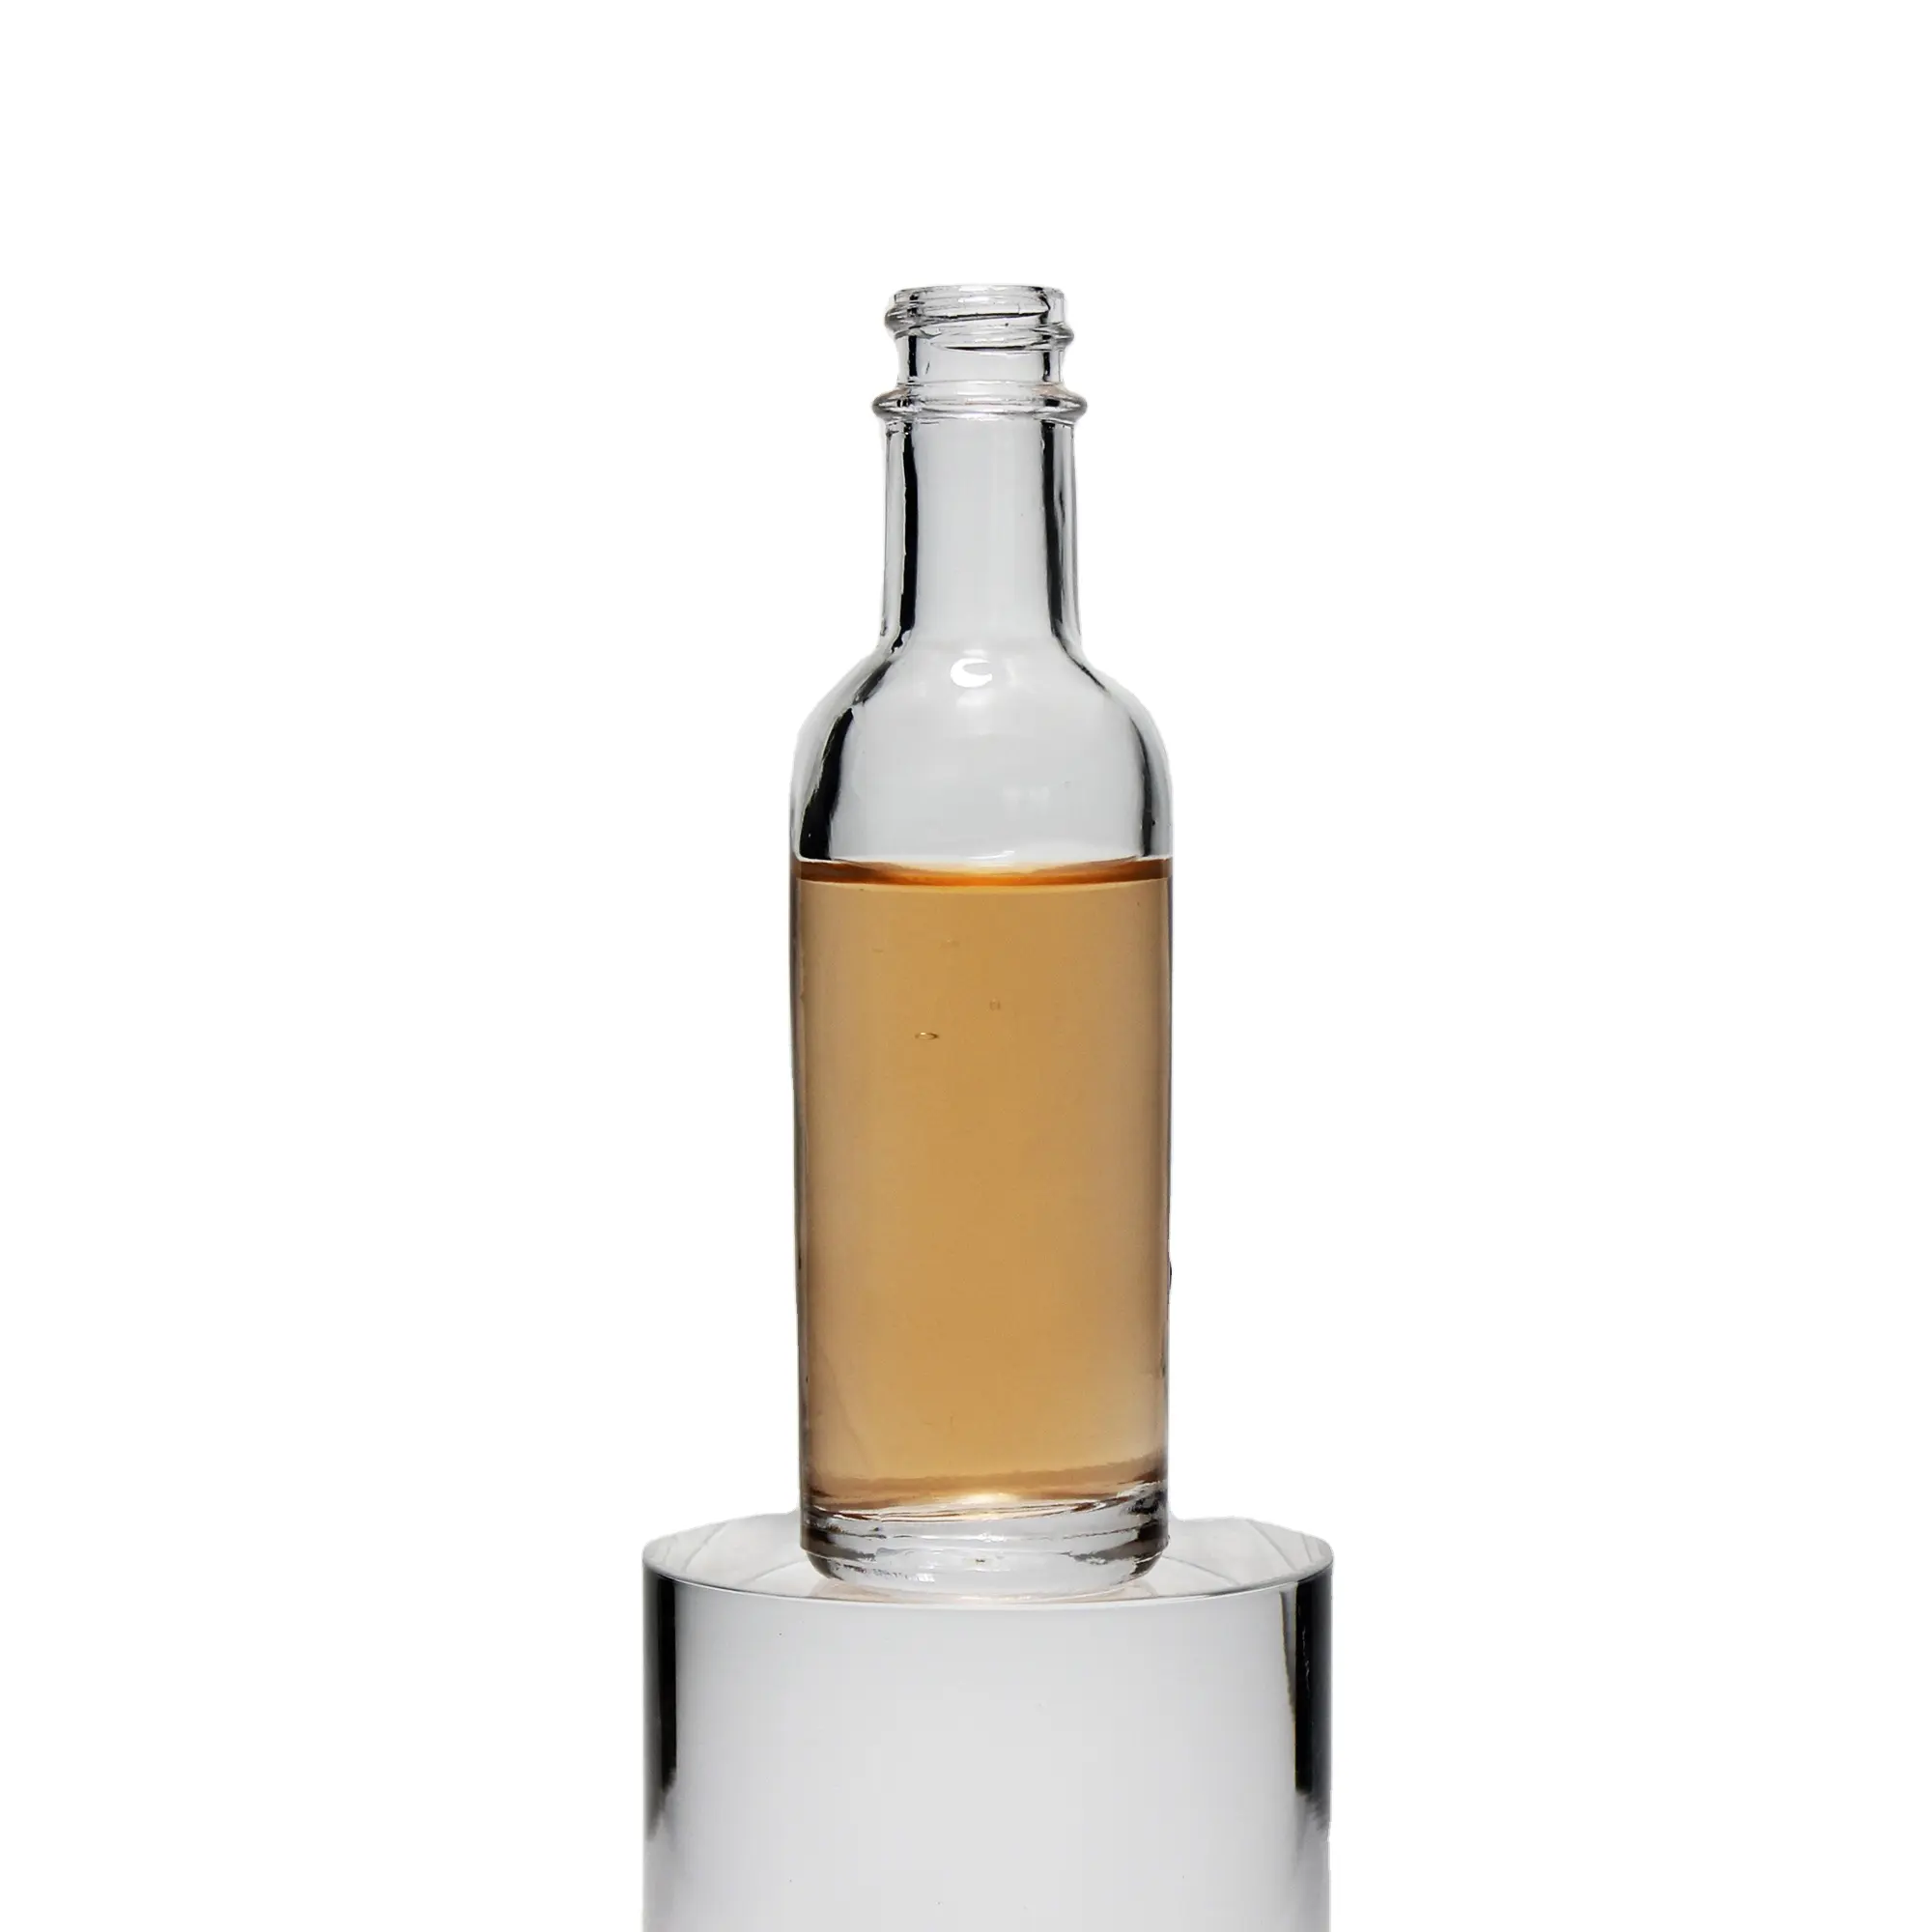 Kostenlose probe super flint material 50 ml Glas tequila los mini-tequila-flaschen